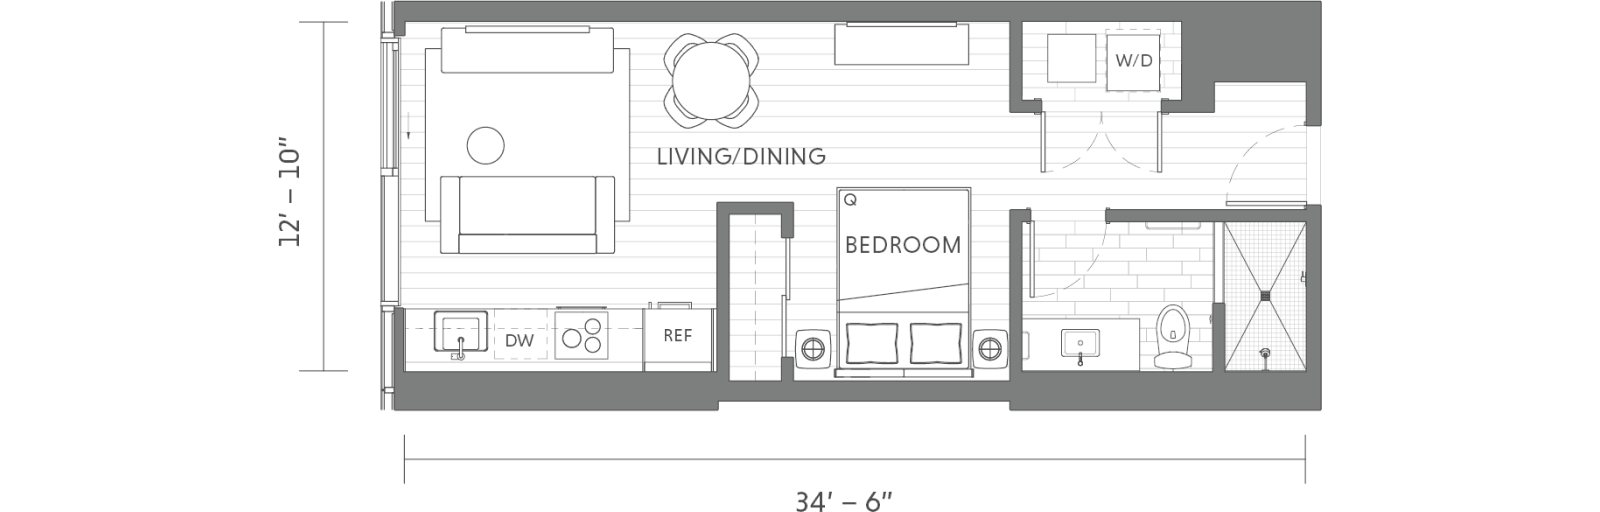 Residence 09 floor plan